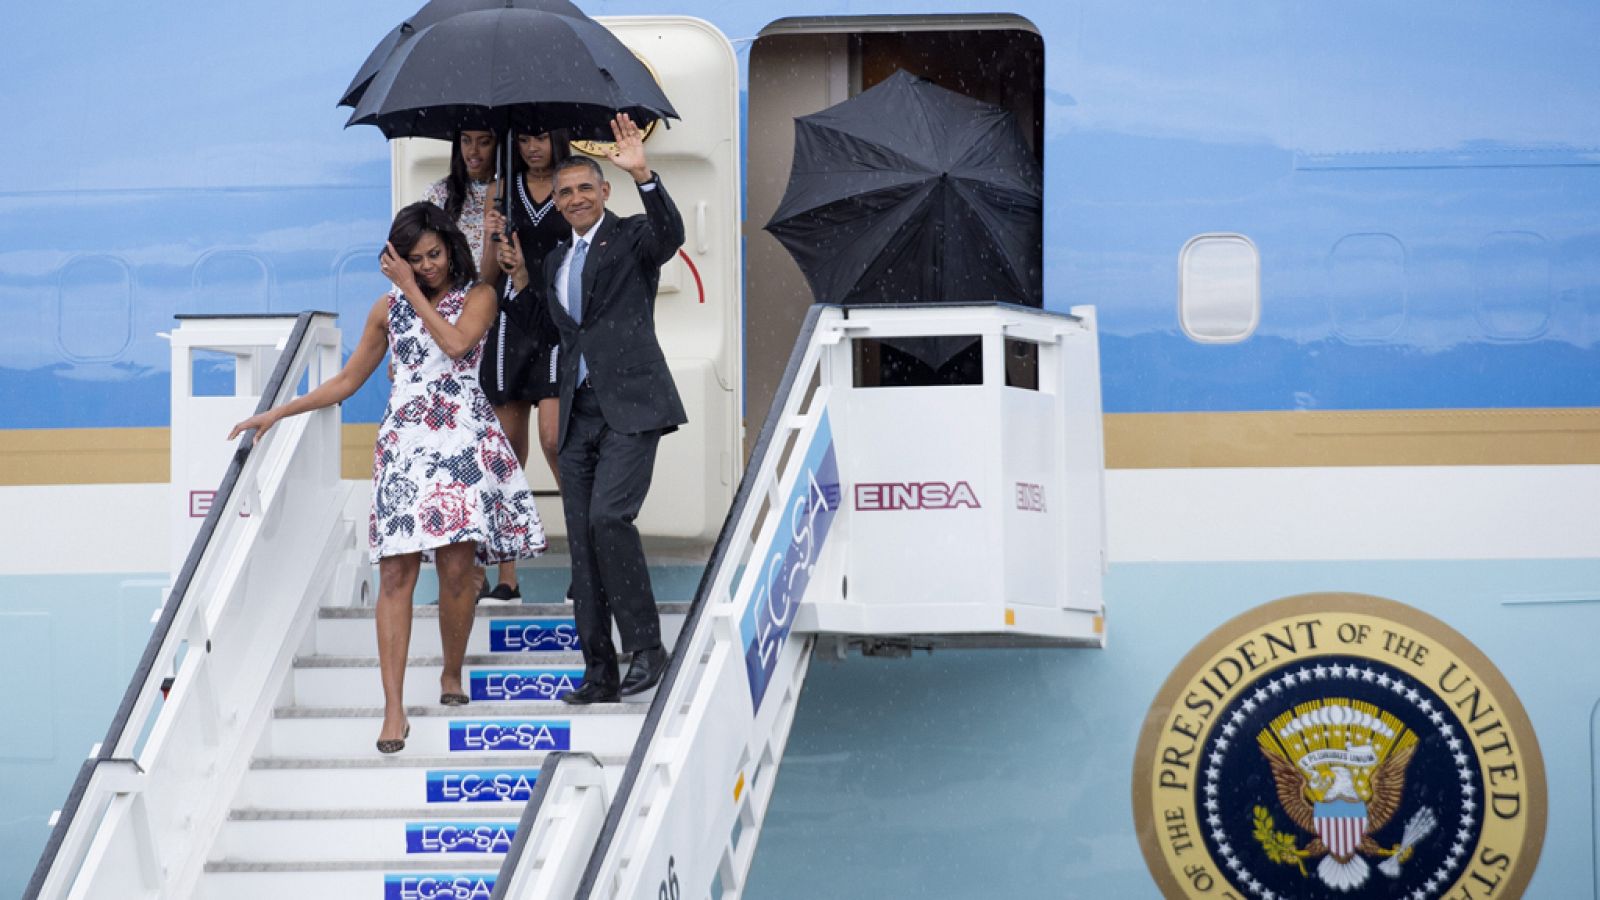 Telediario 1: Momento de la llegada de Barack Obama al Aeropuerto de La Habana | RTVE Play